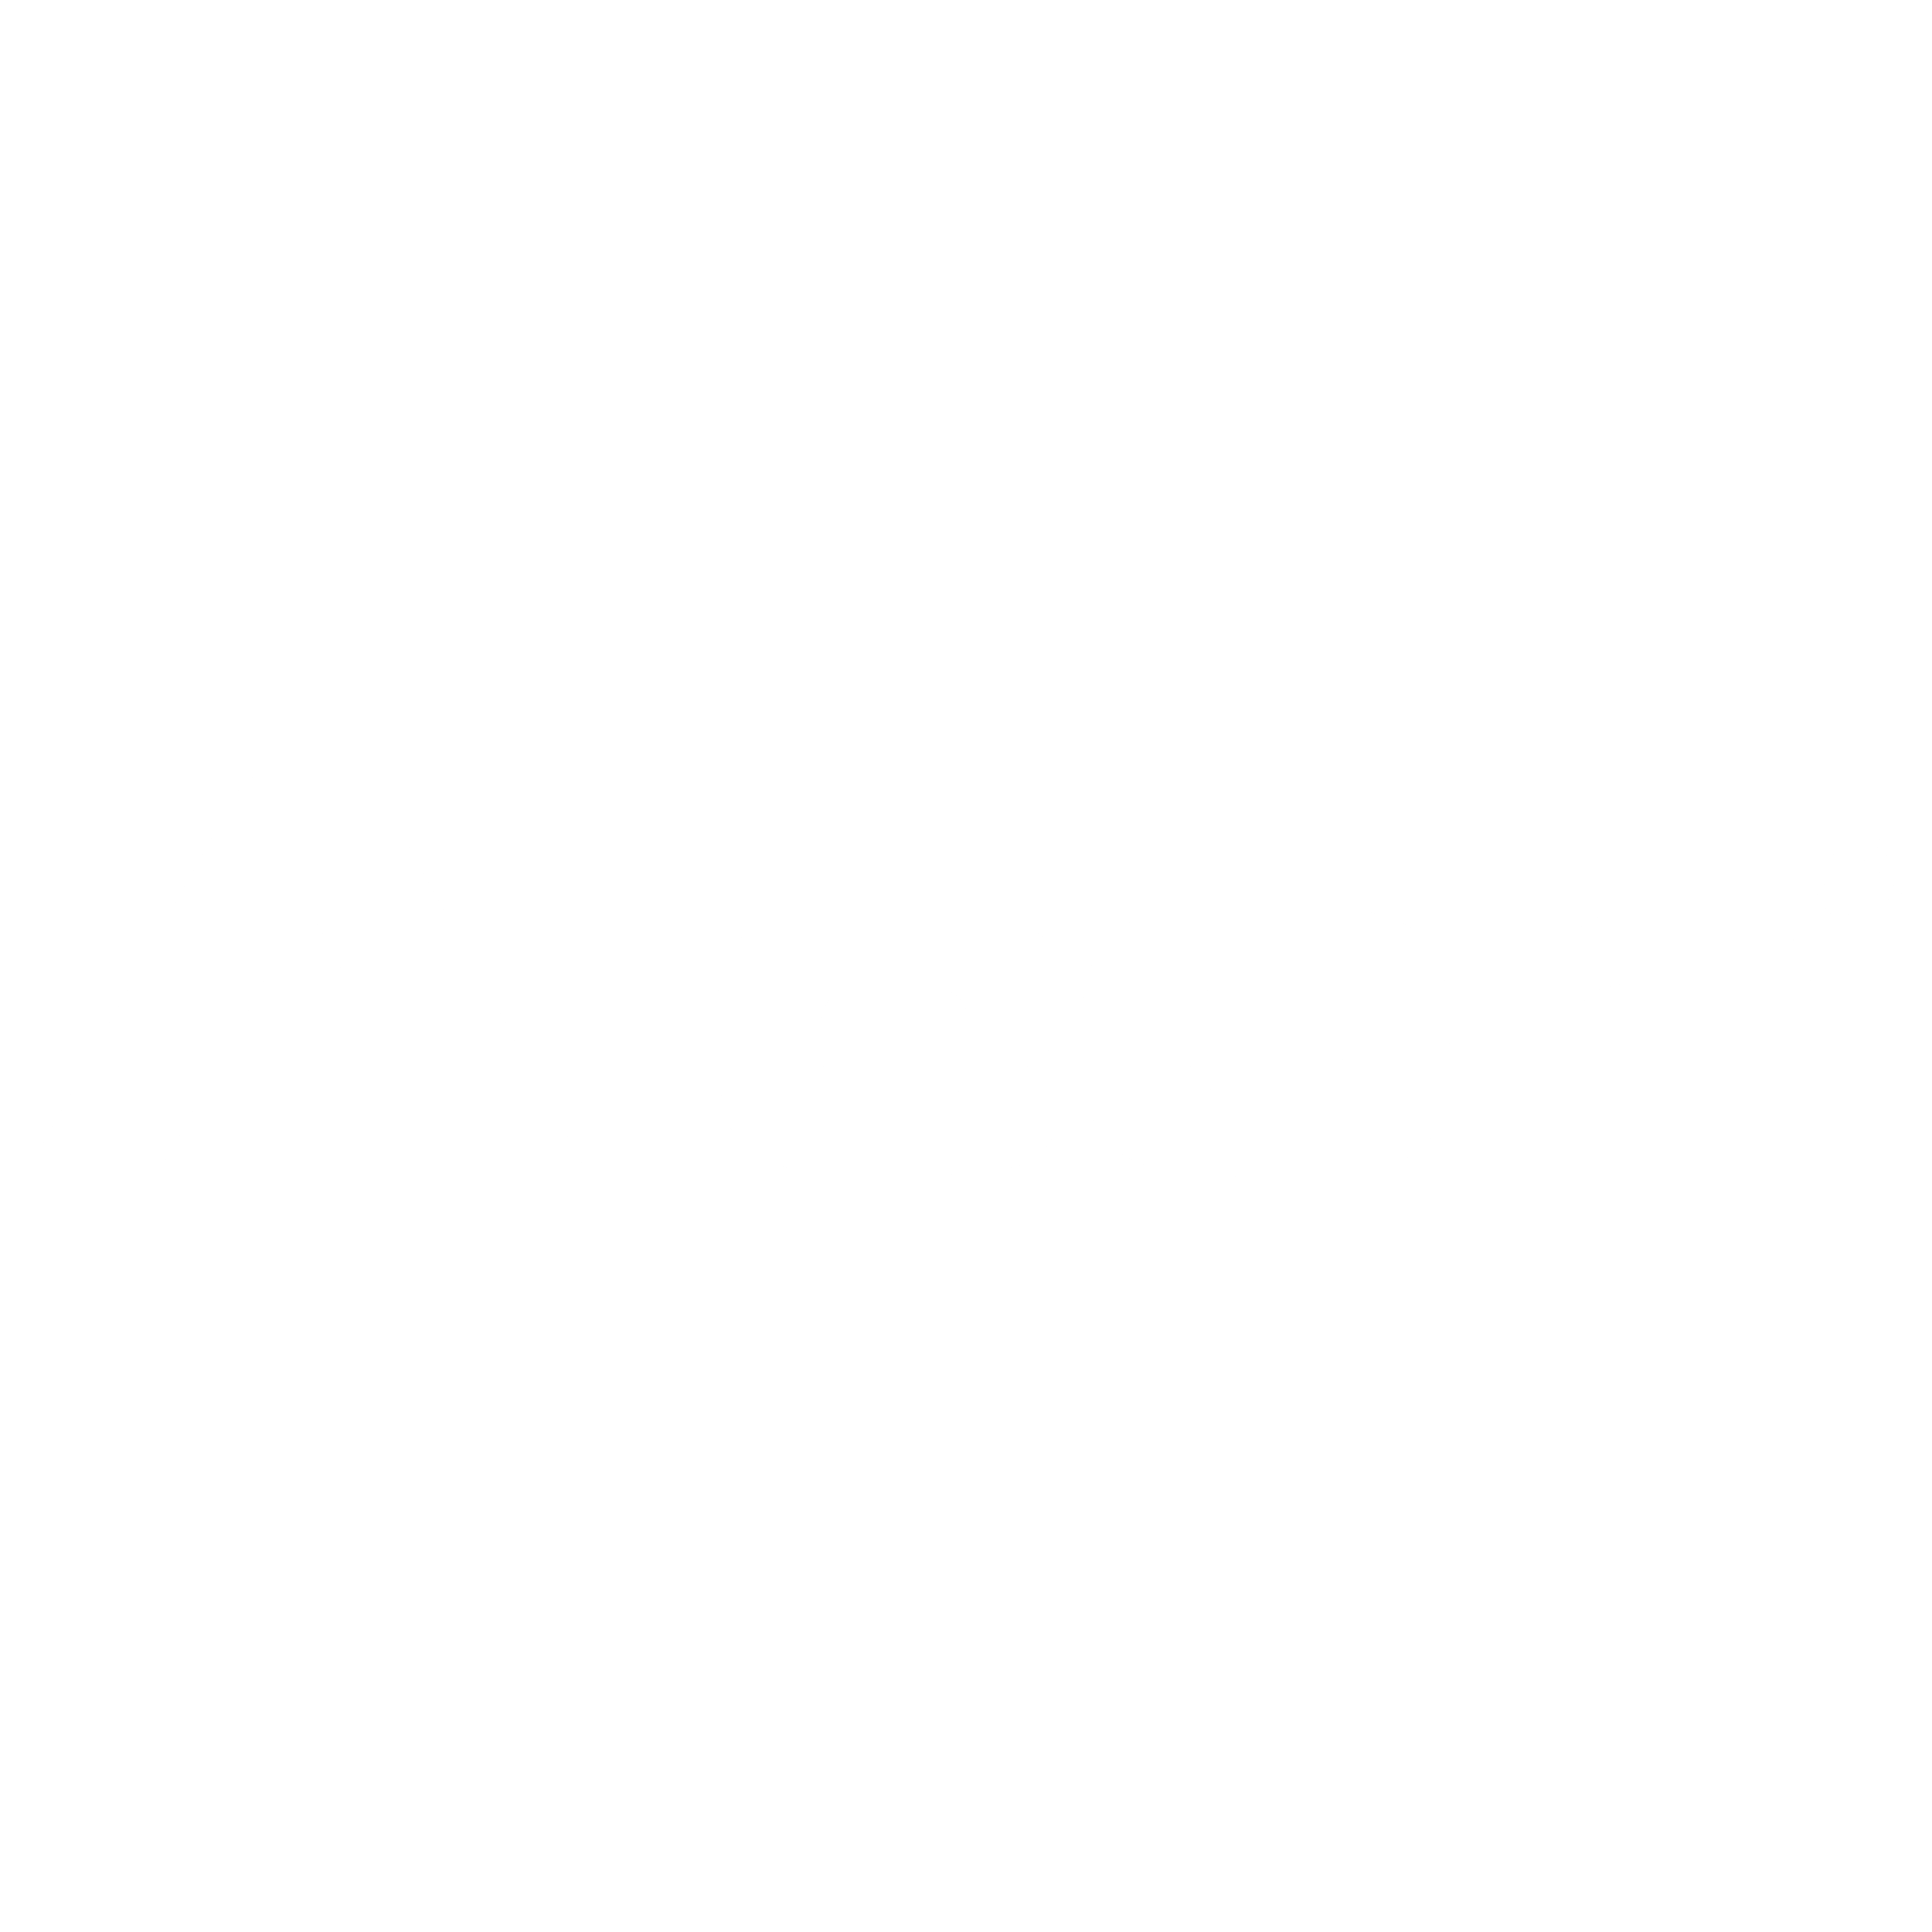 Alcon Logo - Alcon Logo PNG Transparent & SVG Vector